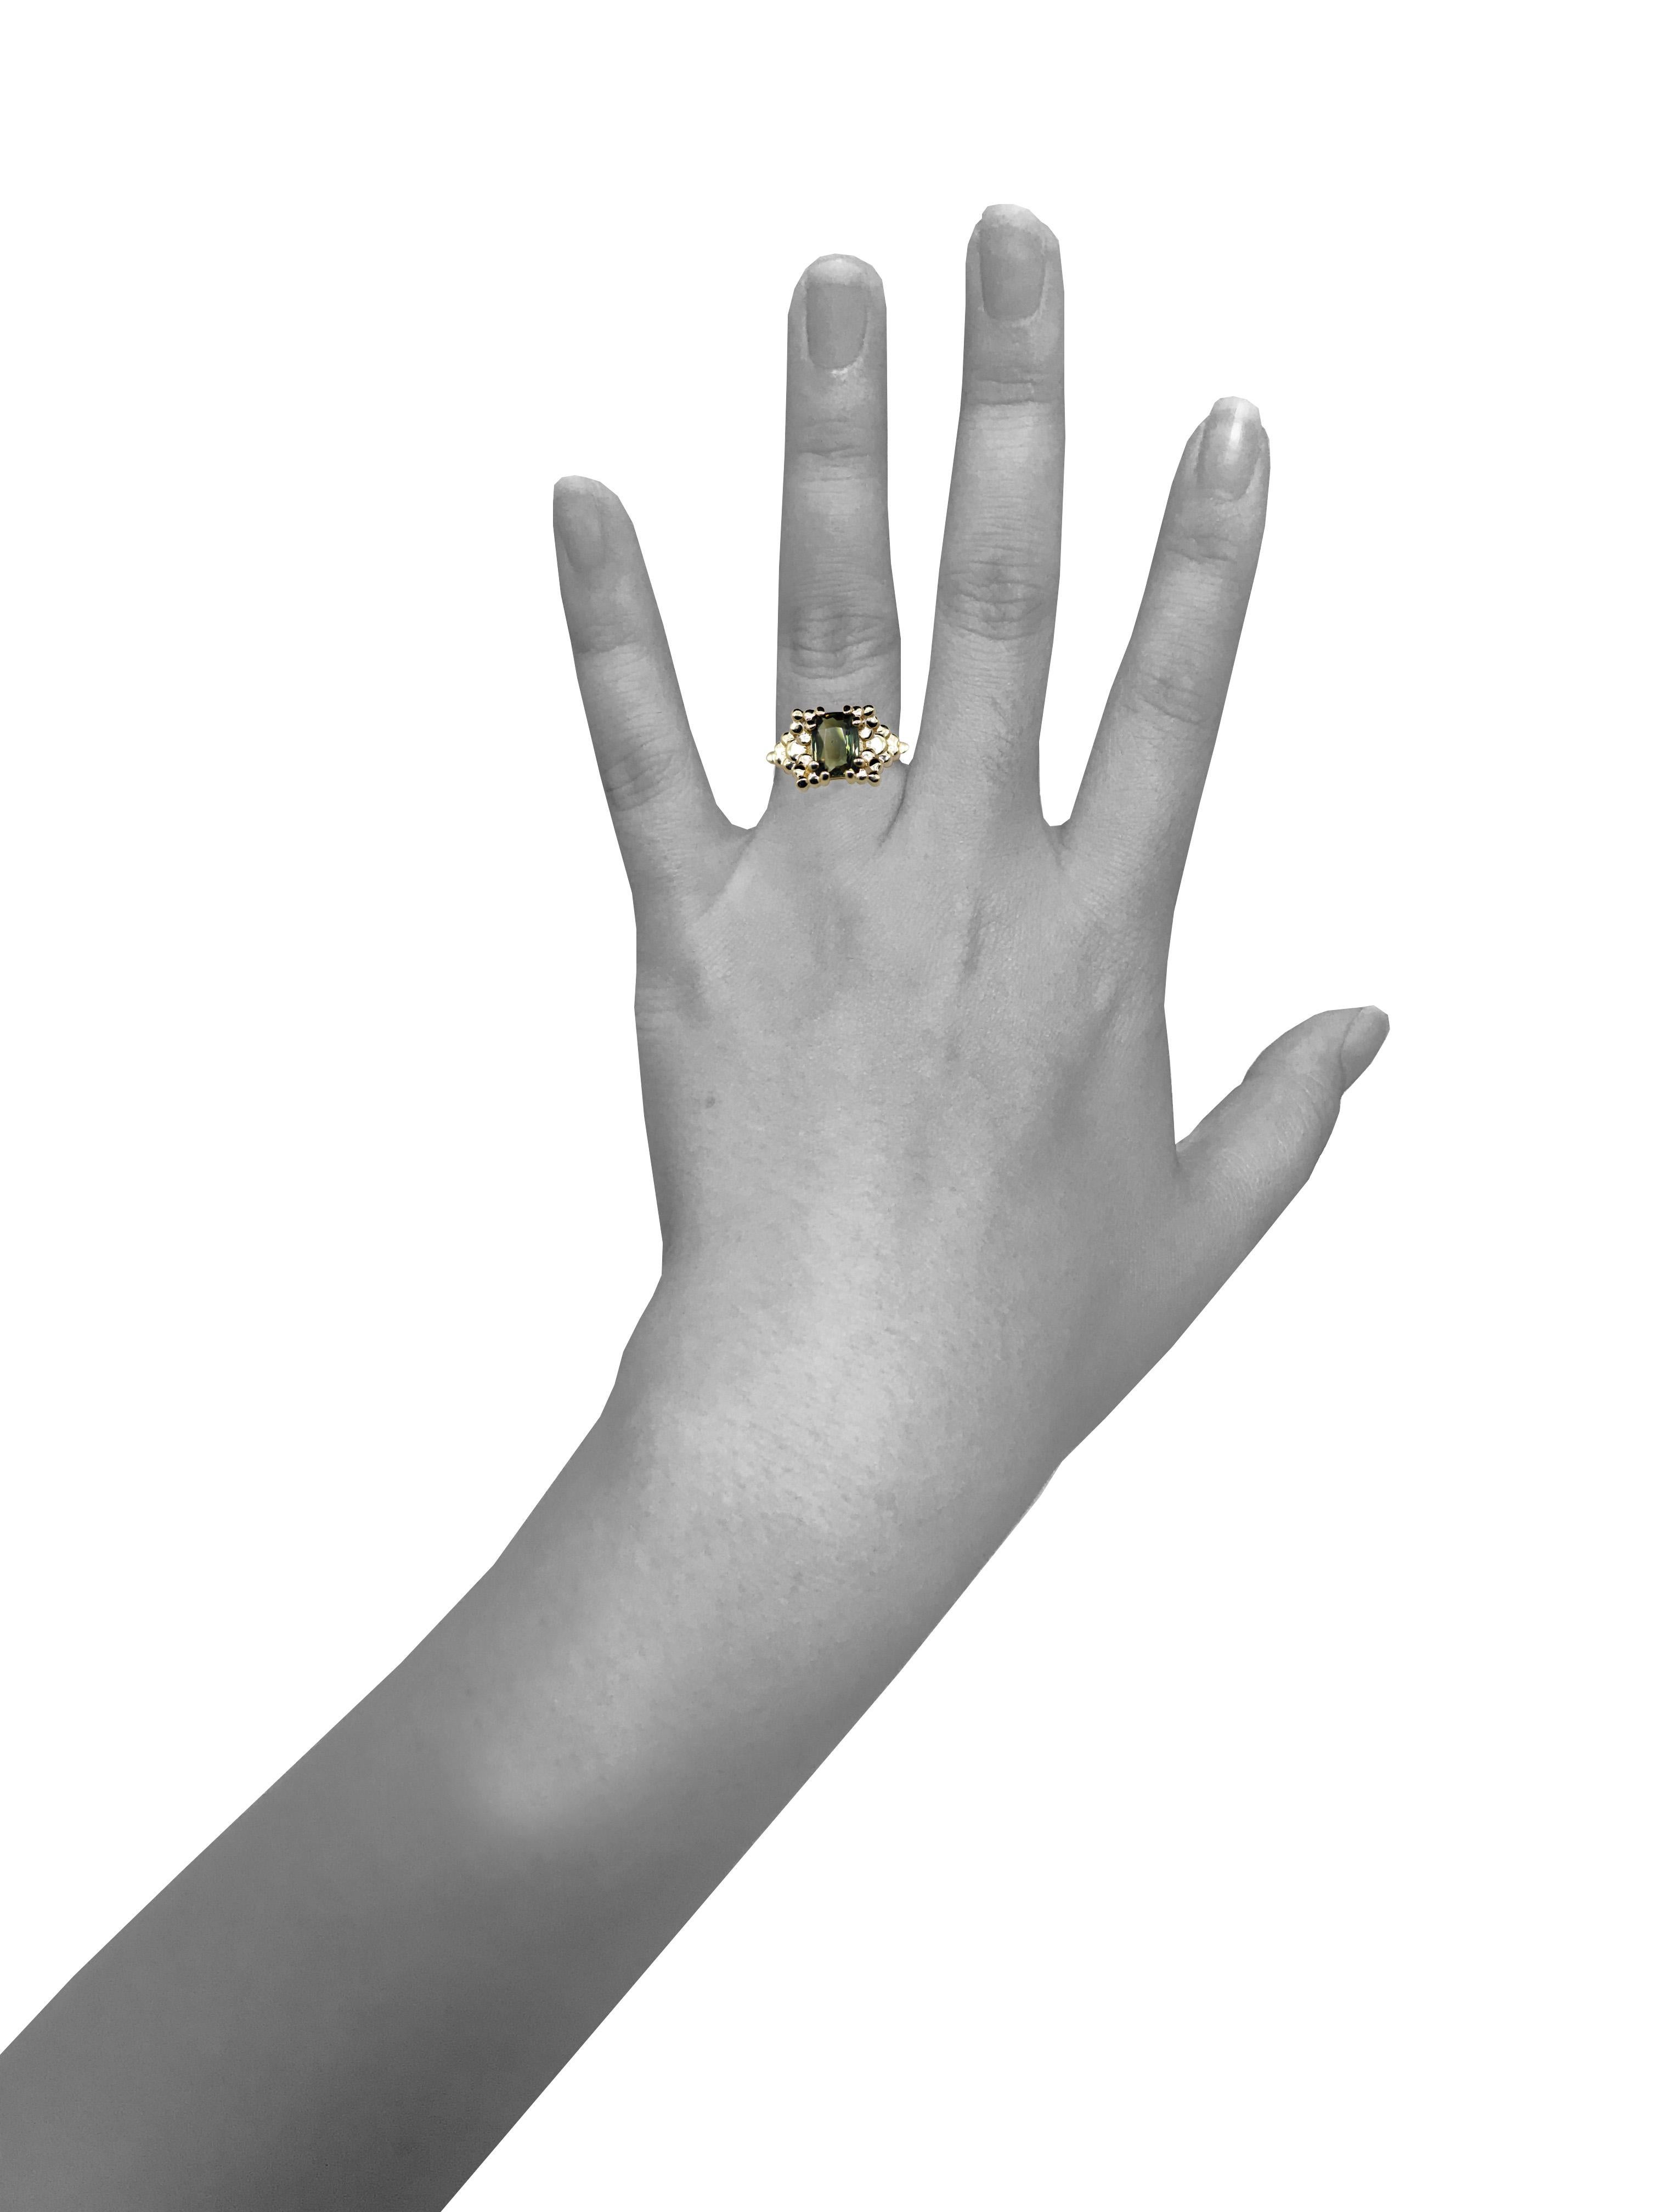 MAIKO NAGAYAMA 2.13 Carat Natural Color-Change Alexandrite Engagement Ring For Sale 1